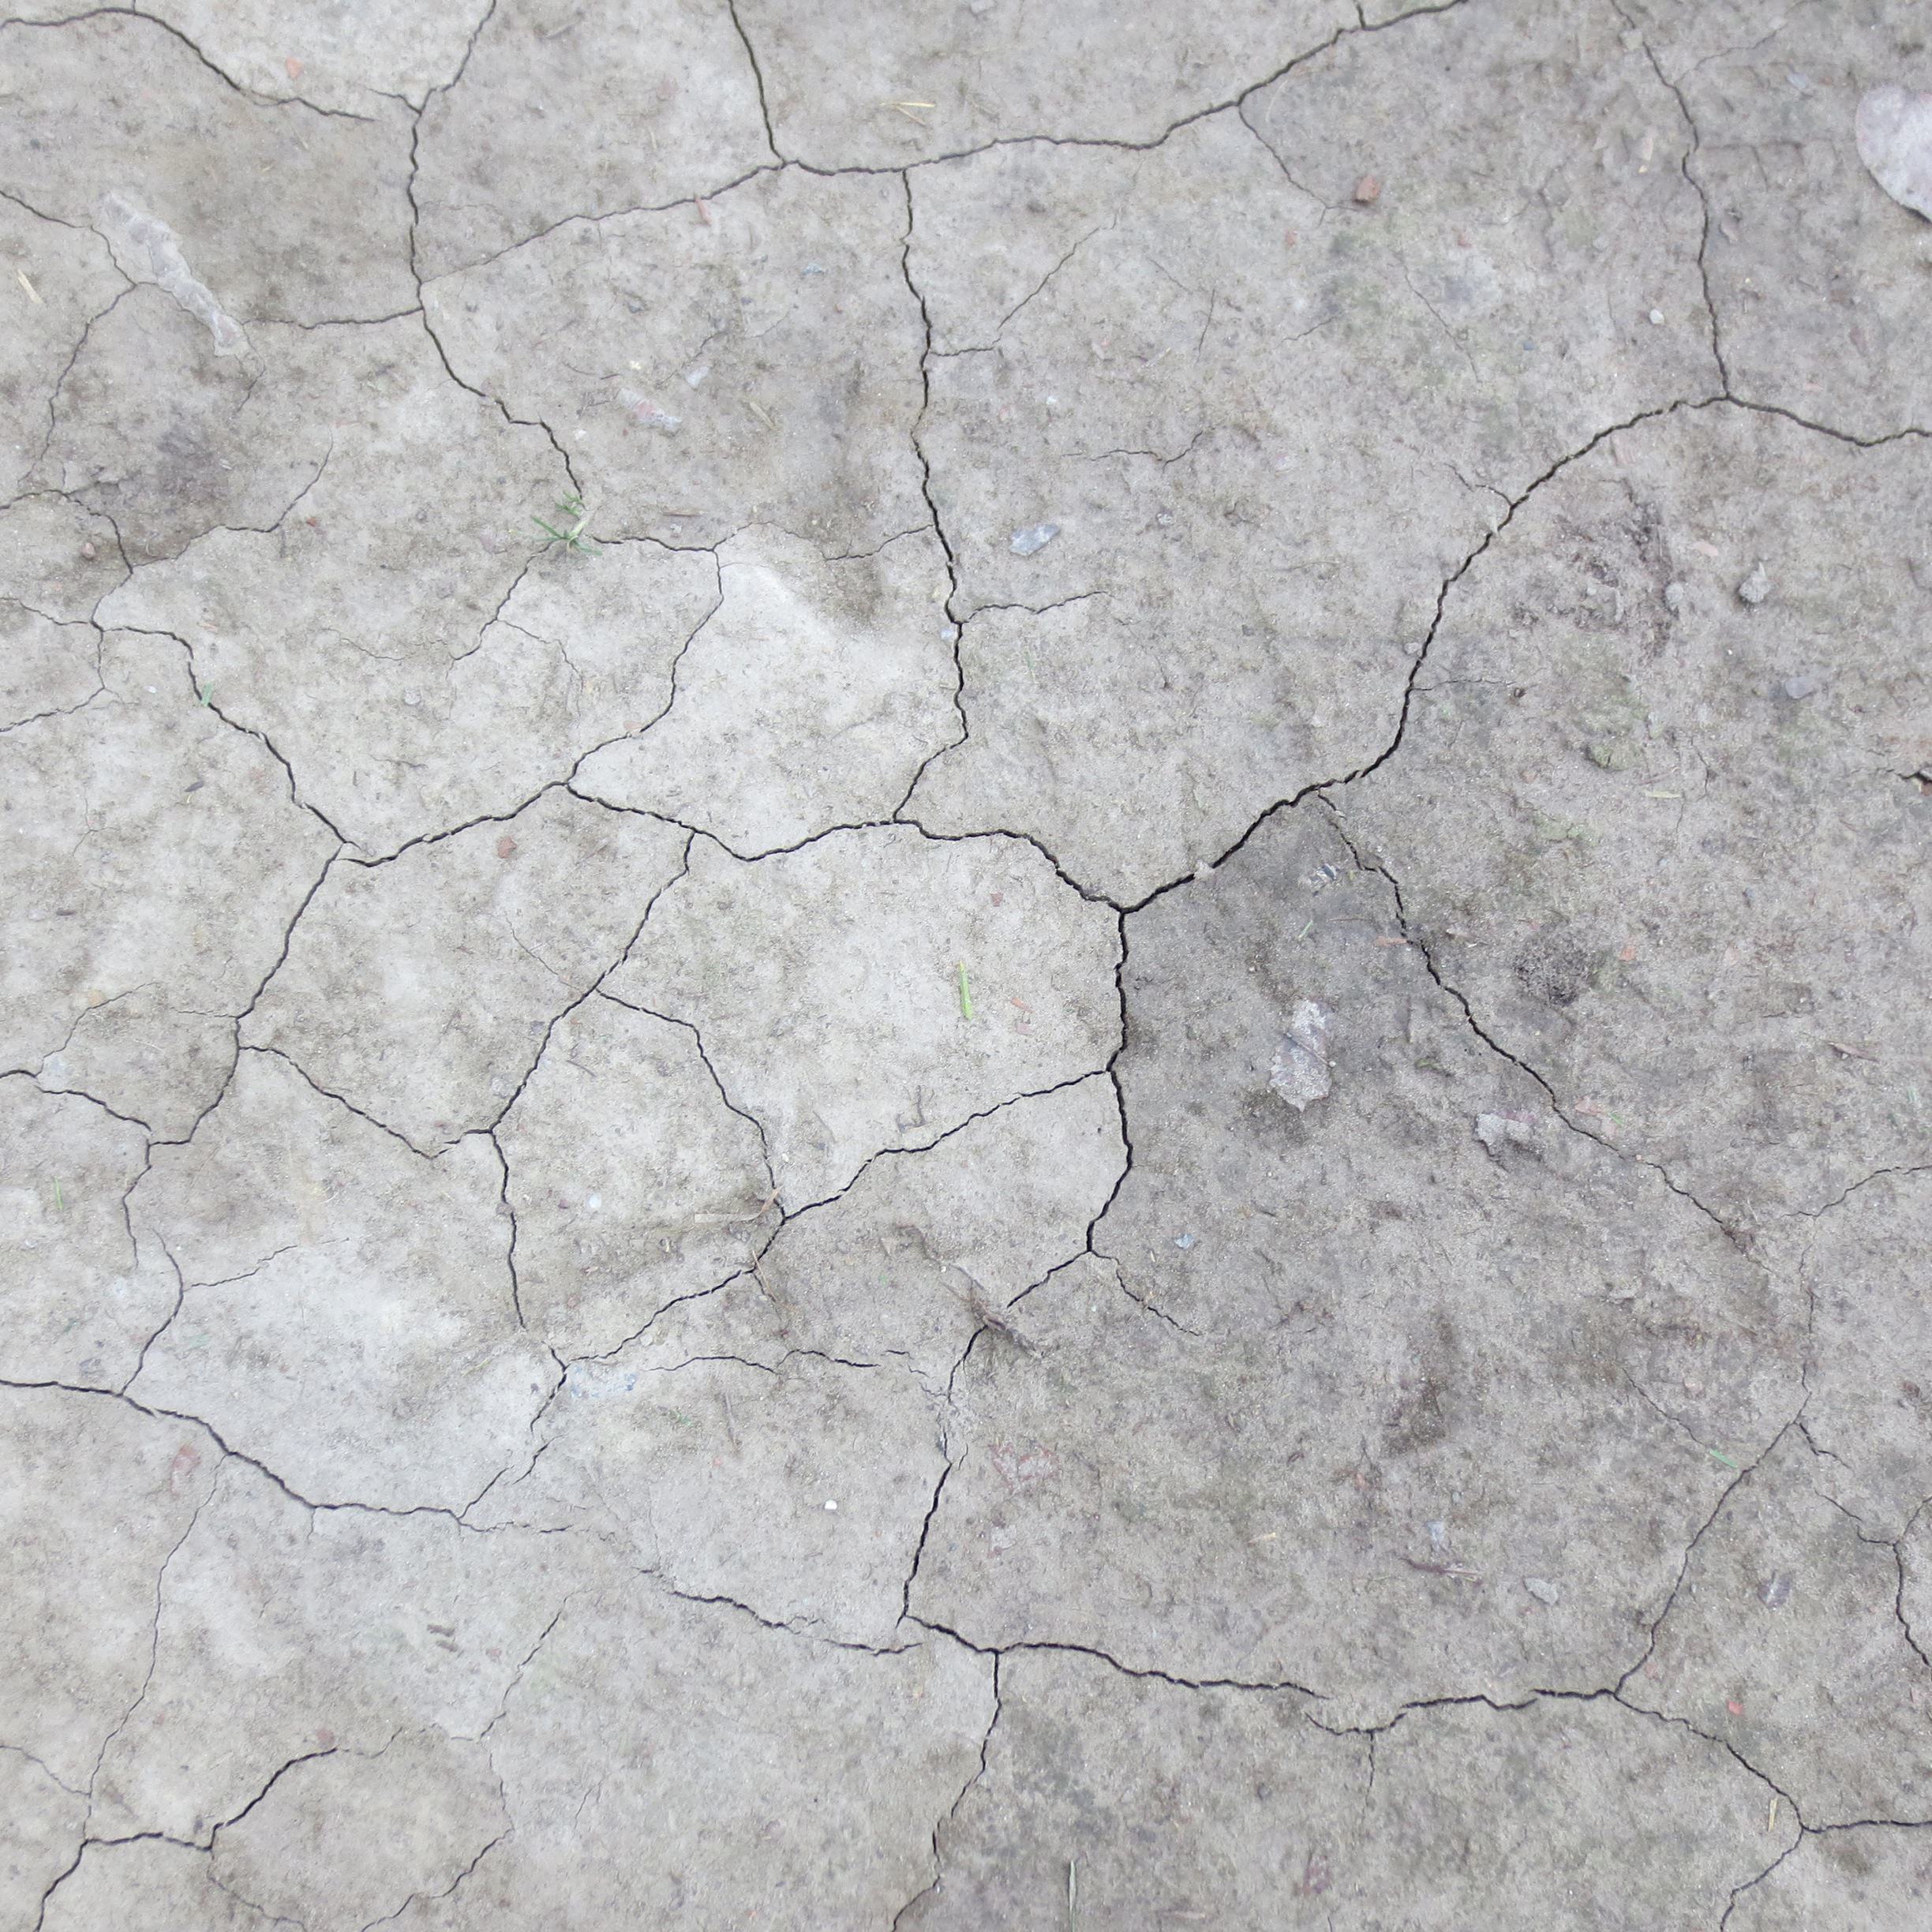 tumblr ipad wallpapers Kabe   wallpaper.sc cracked iPad white concrete